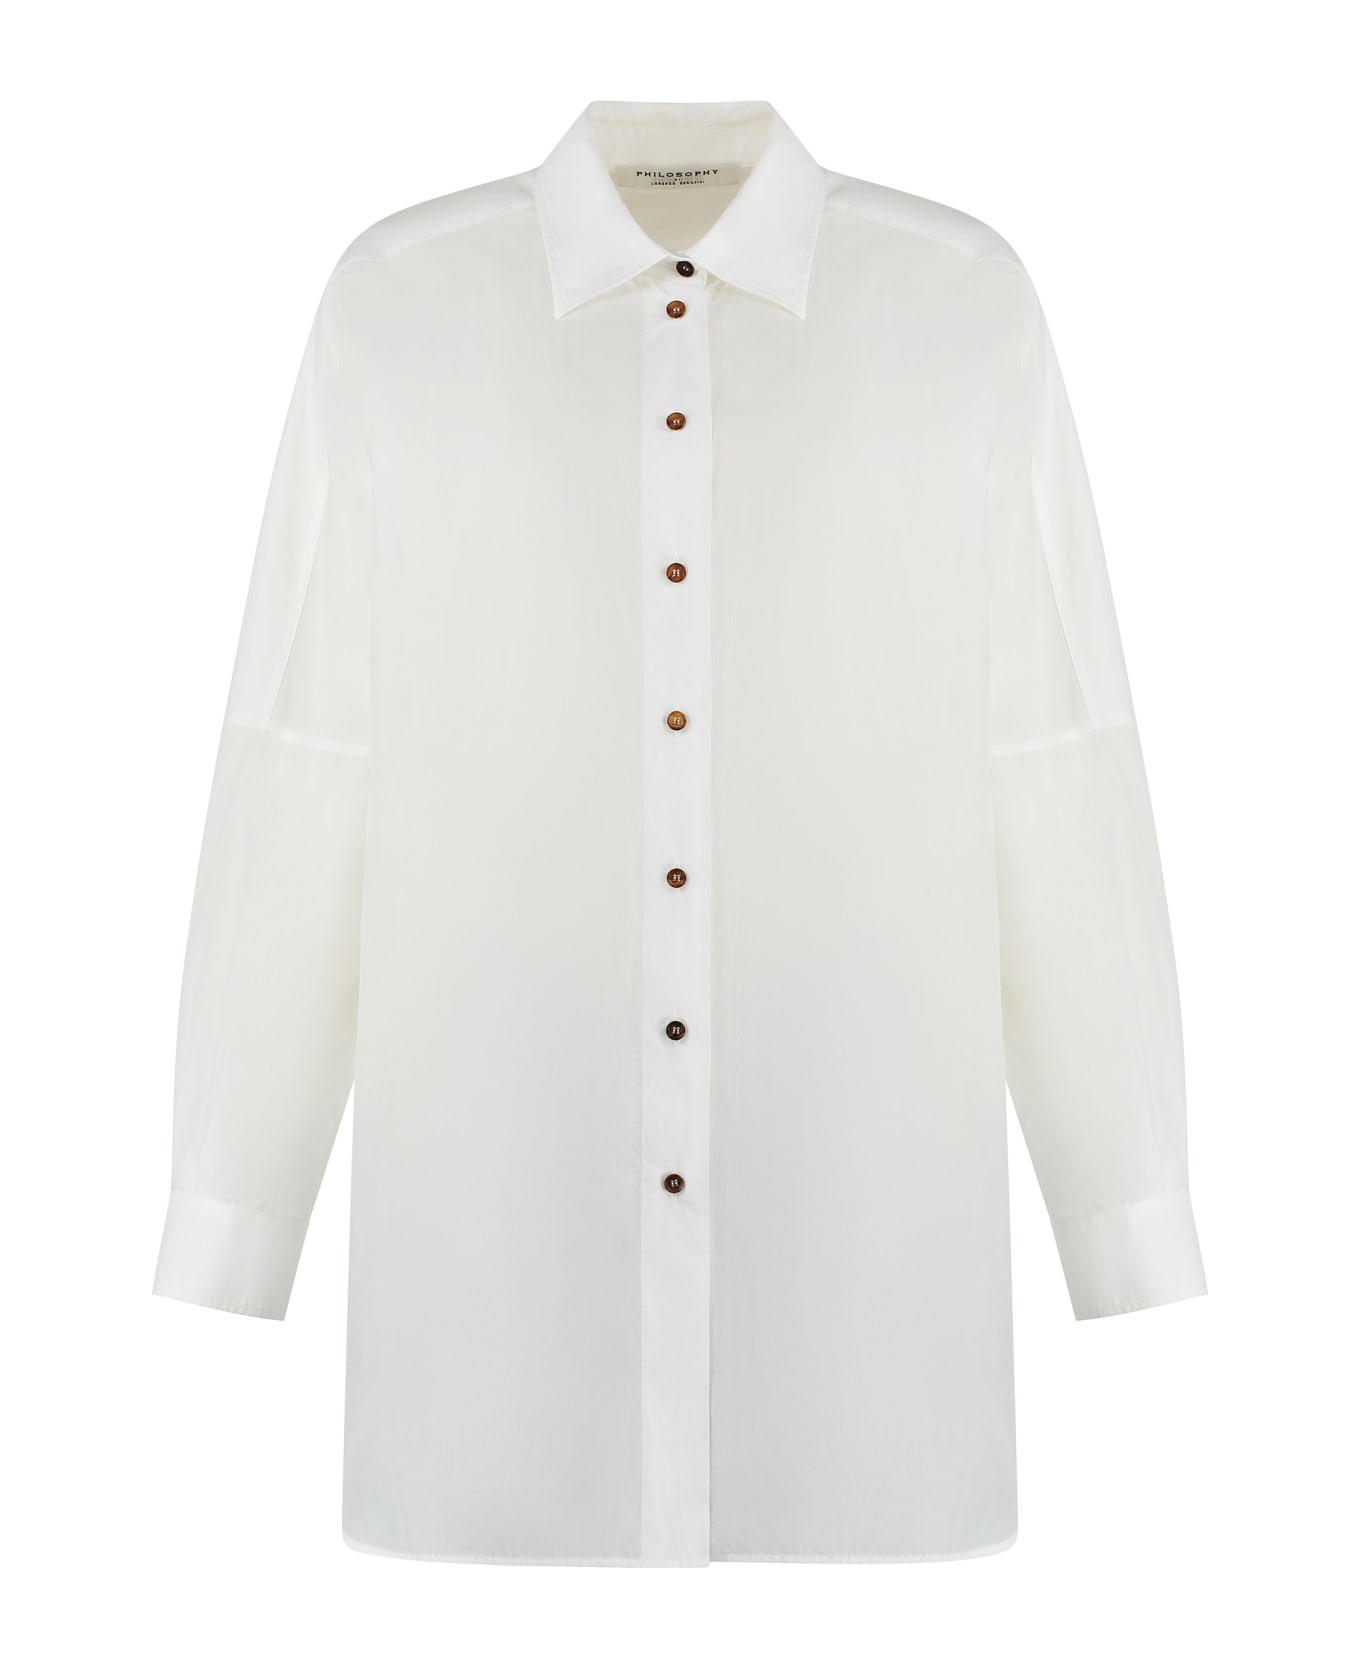 Philosophy di Lorenzo Serafini Cotton Blend Shirt - White